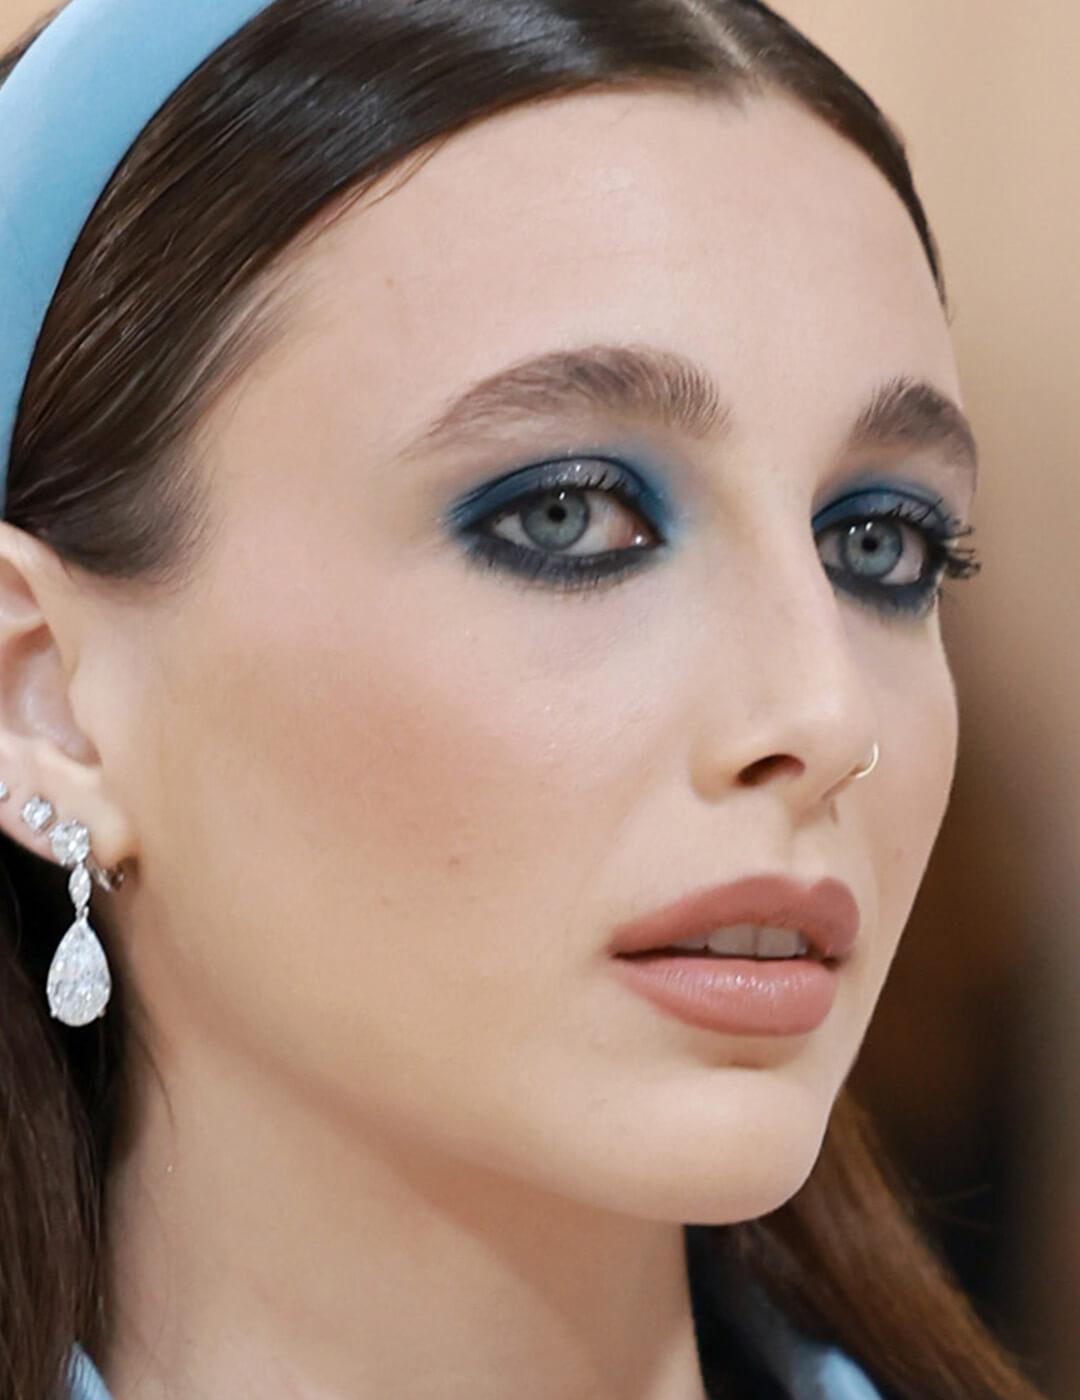 Emma Chamberlain rocking a dark blue smoky eye makeup look